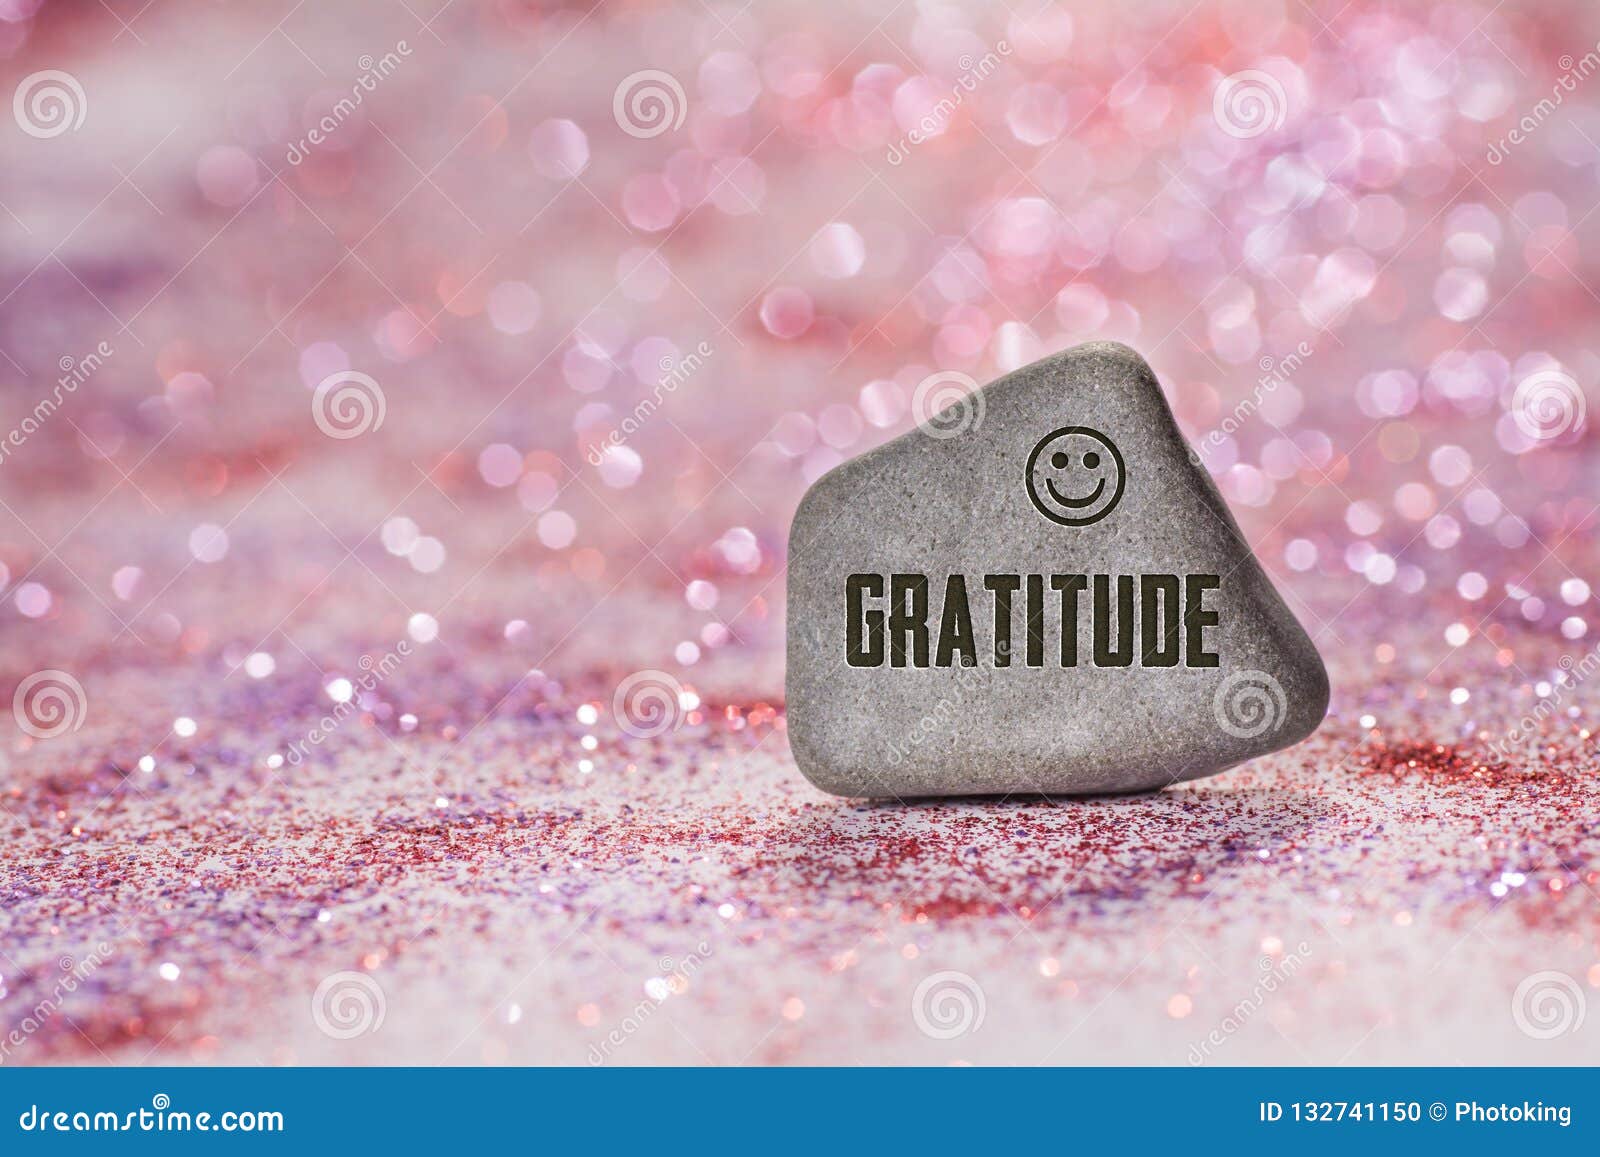 gratitude engrave on stone